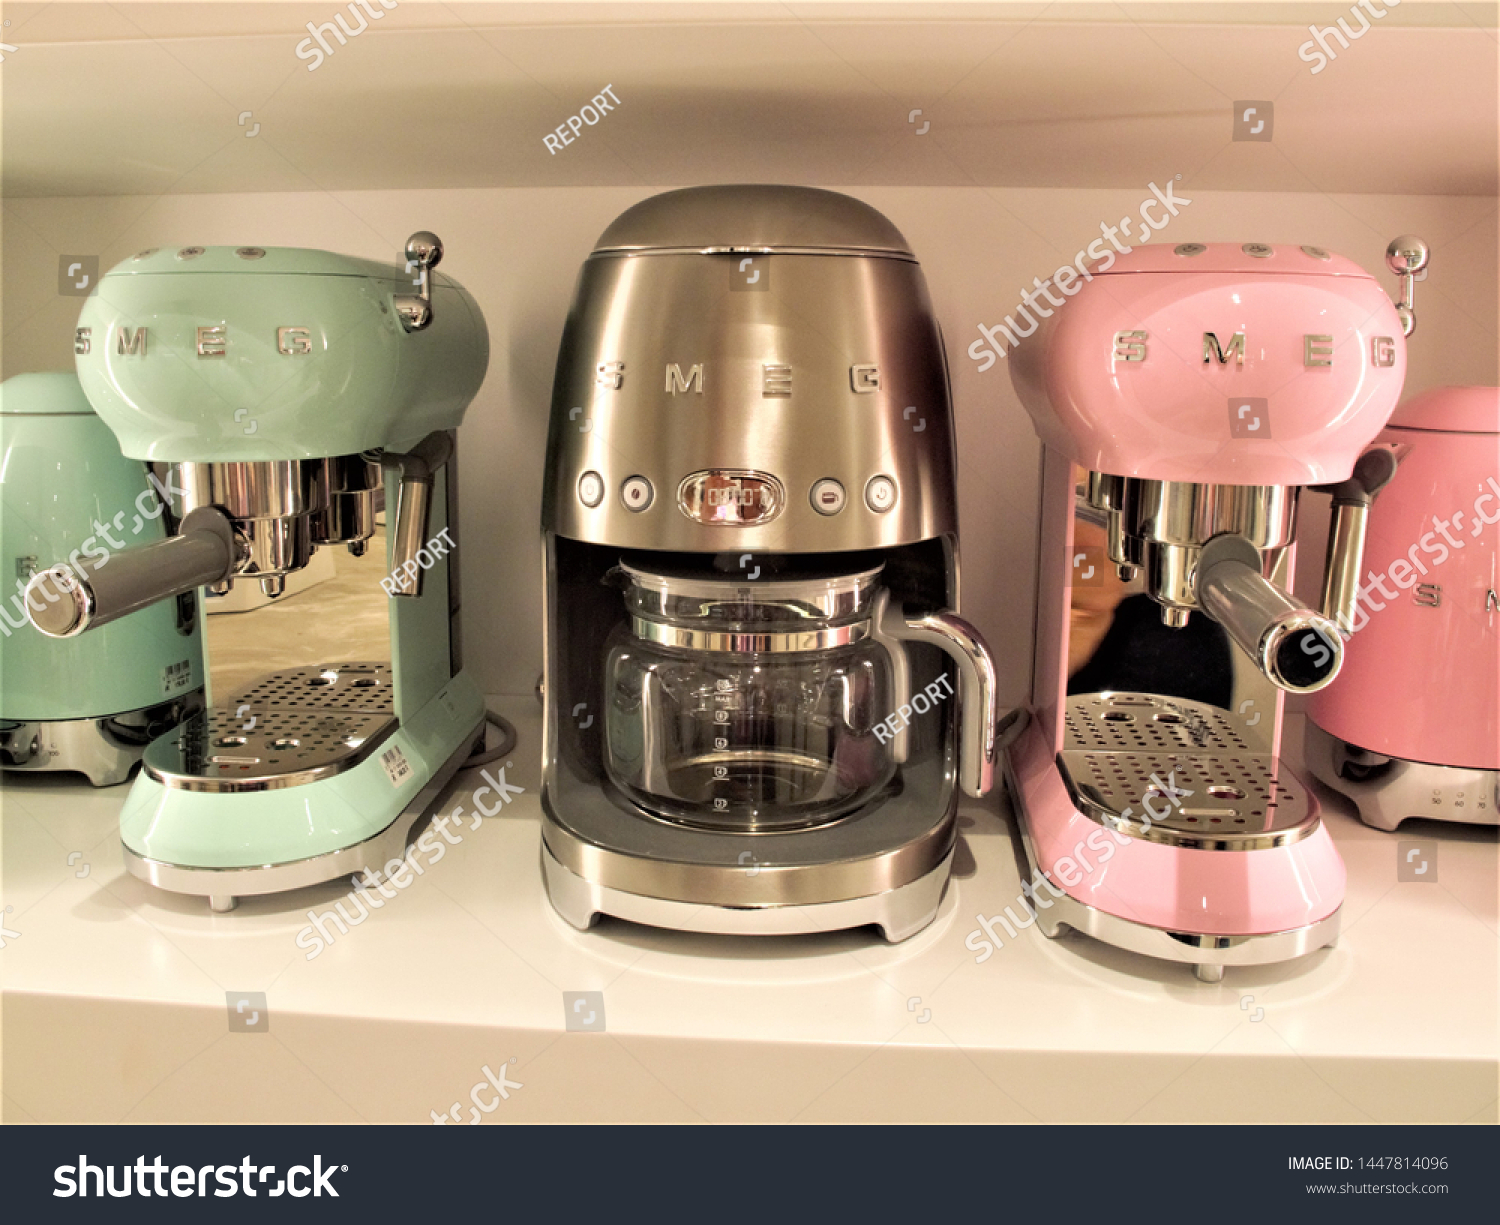 Romejuly 082019 Household Appliances By Smeg Stock Photo Edit Now 1447814096